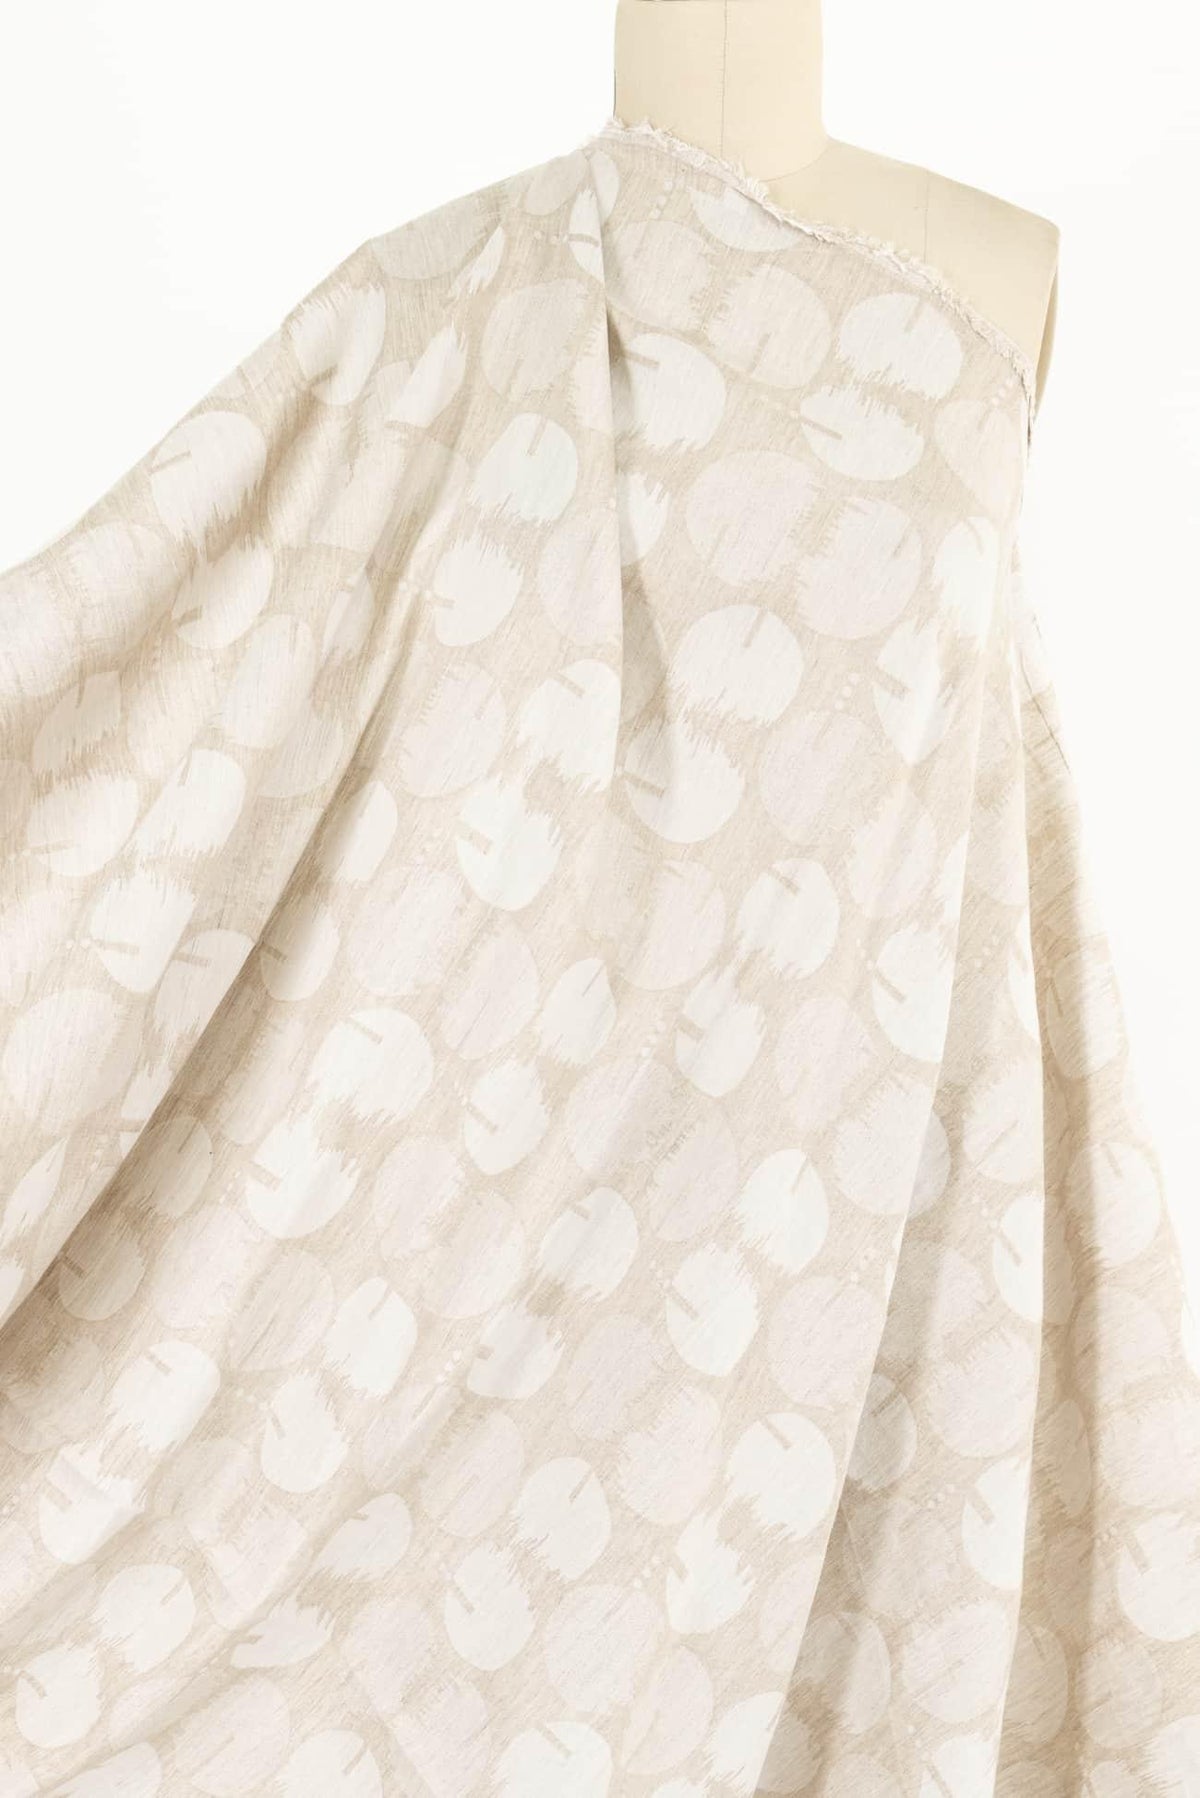 Sand Hills Linen Blend Jacquard Woven - Marcy Tilton Fabrics